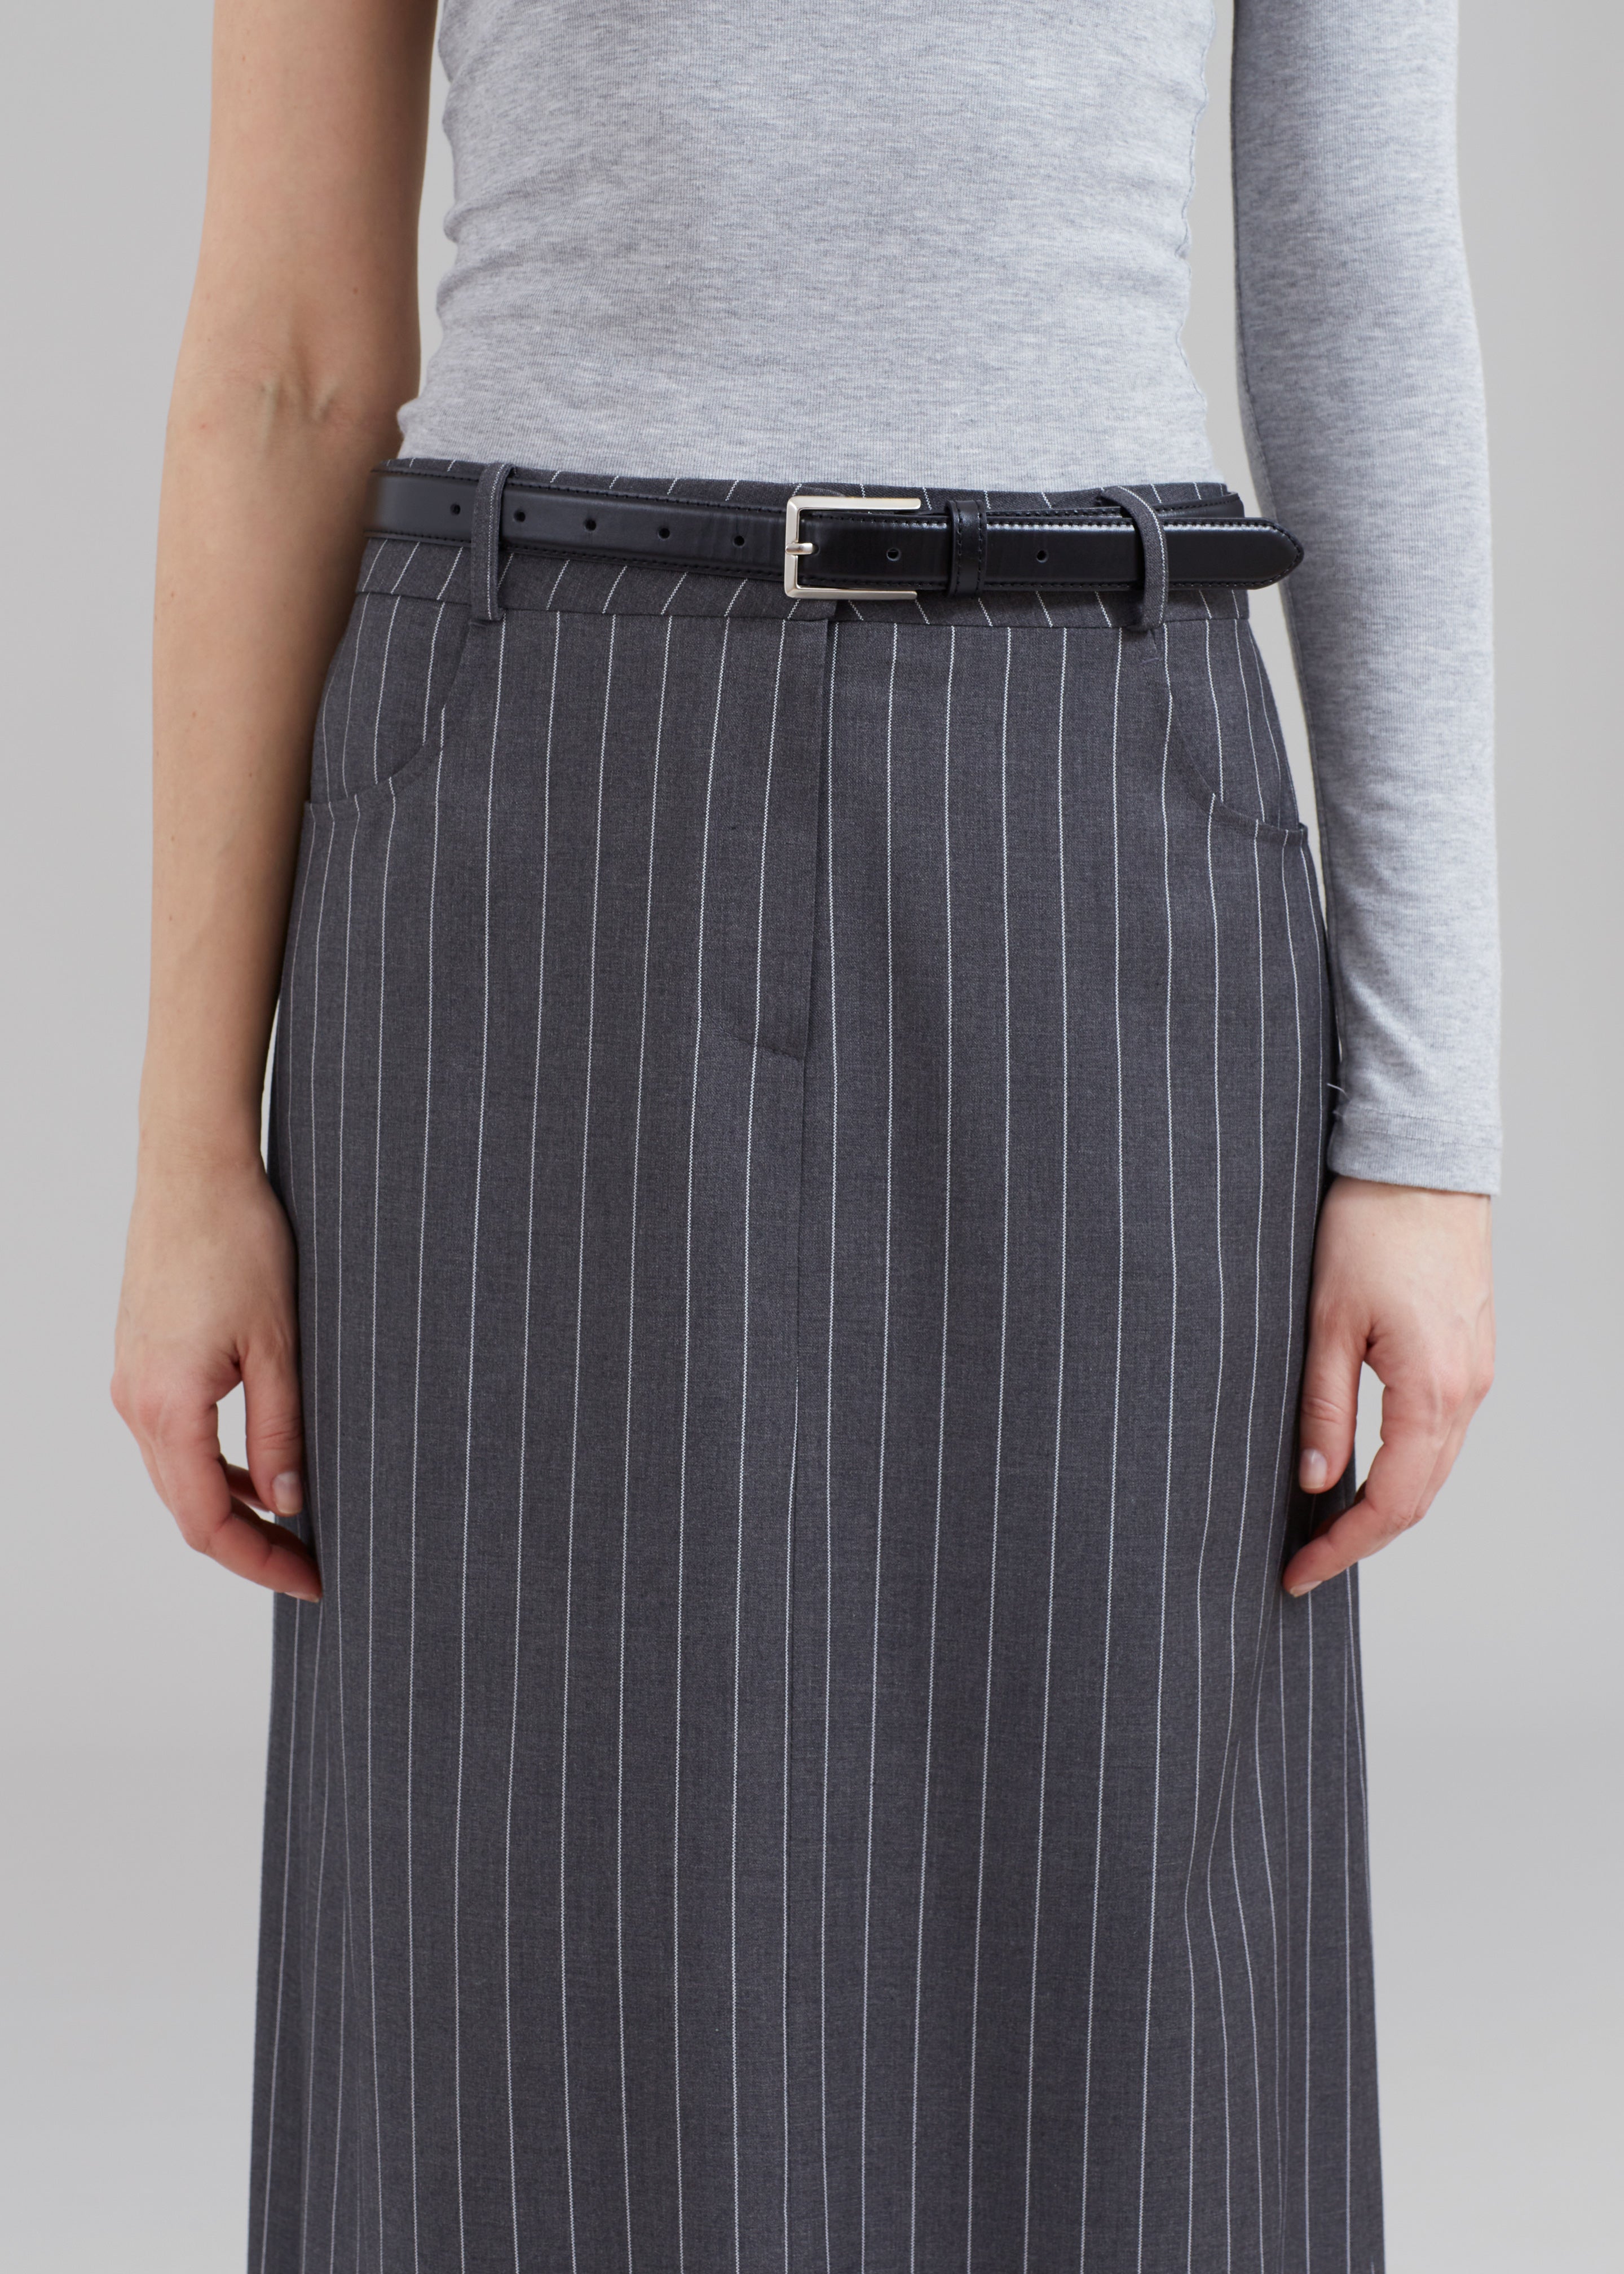 Malvo Long Pencil Skirt - Grey Pinstripe - 3